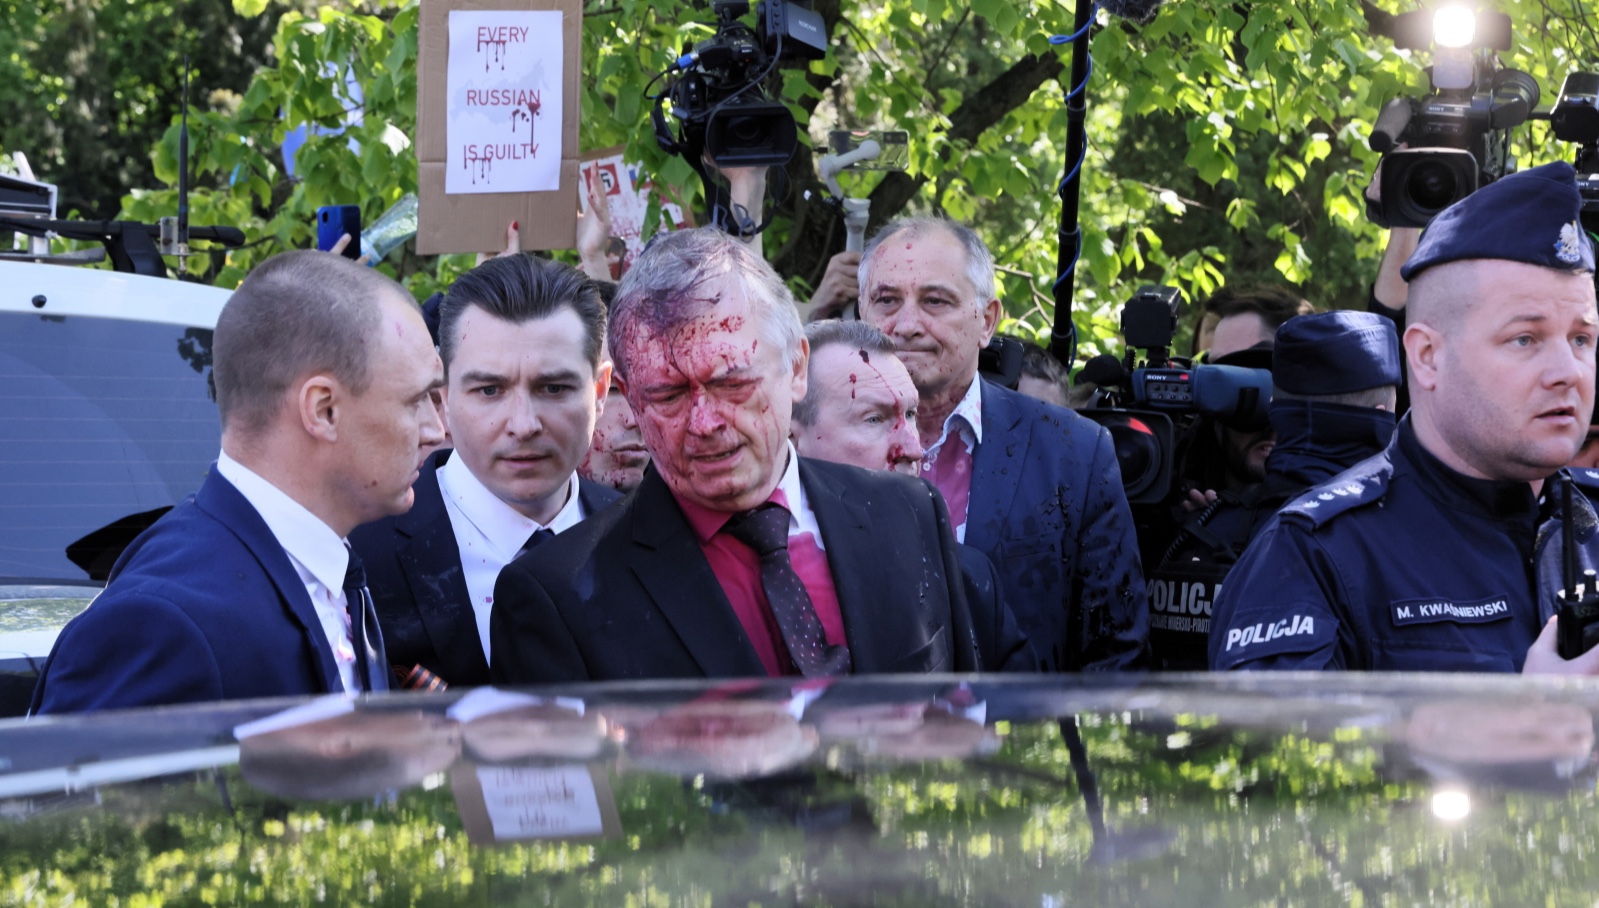 MFA Wawrzyk defends police over Russian ambassador incident